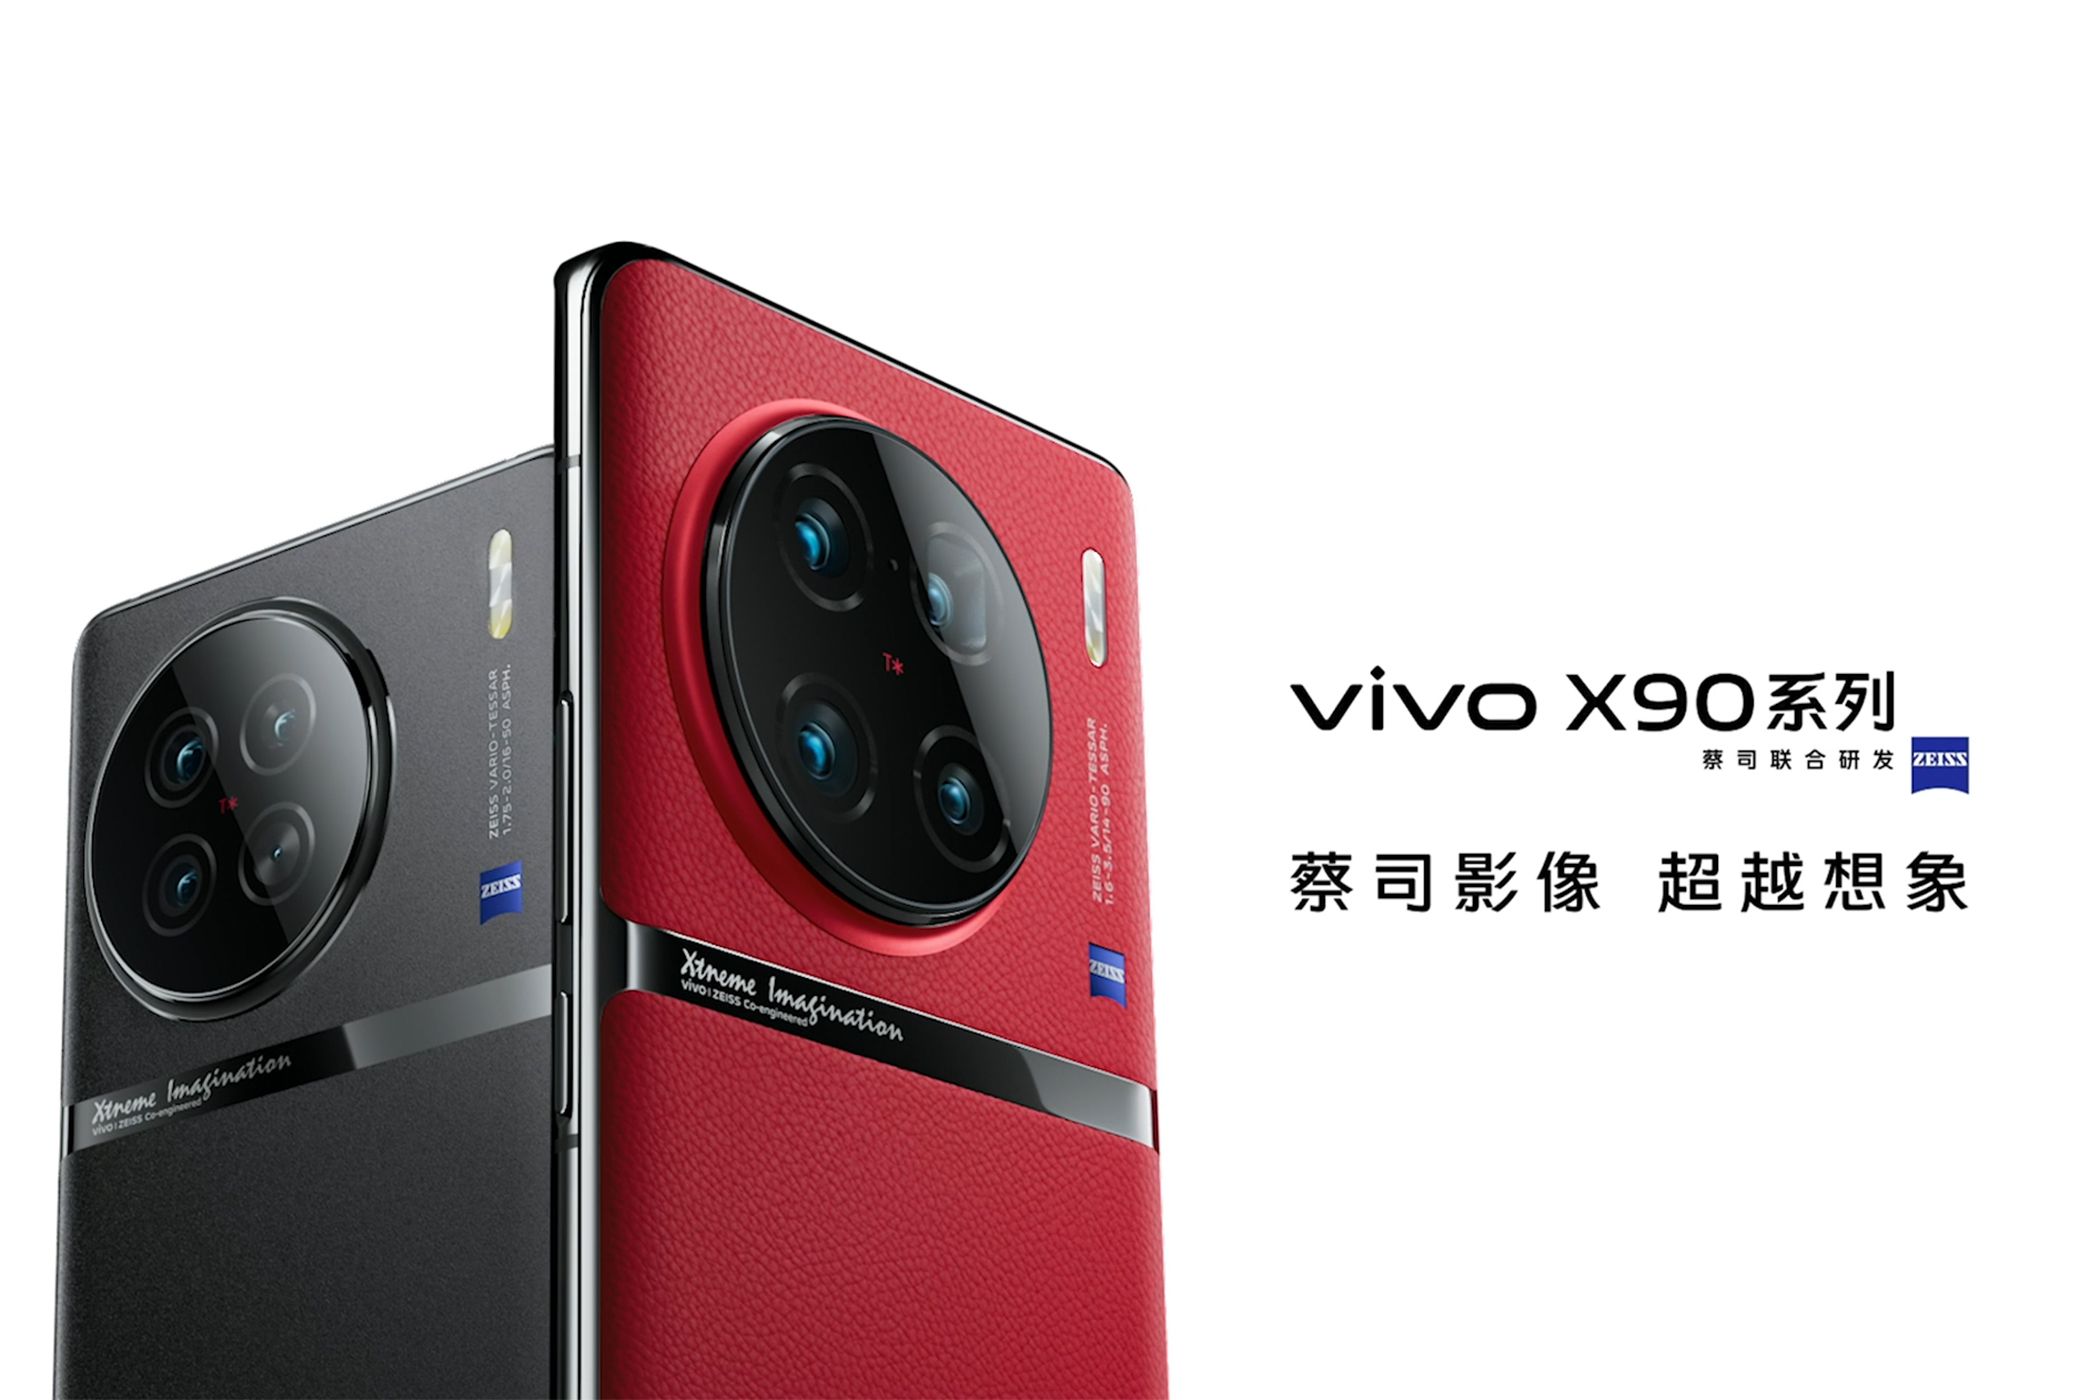 Vivo X90 series China launch poster